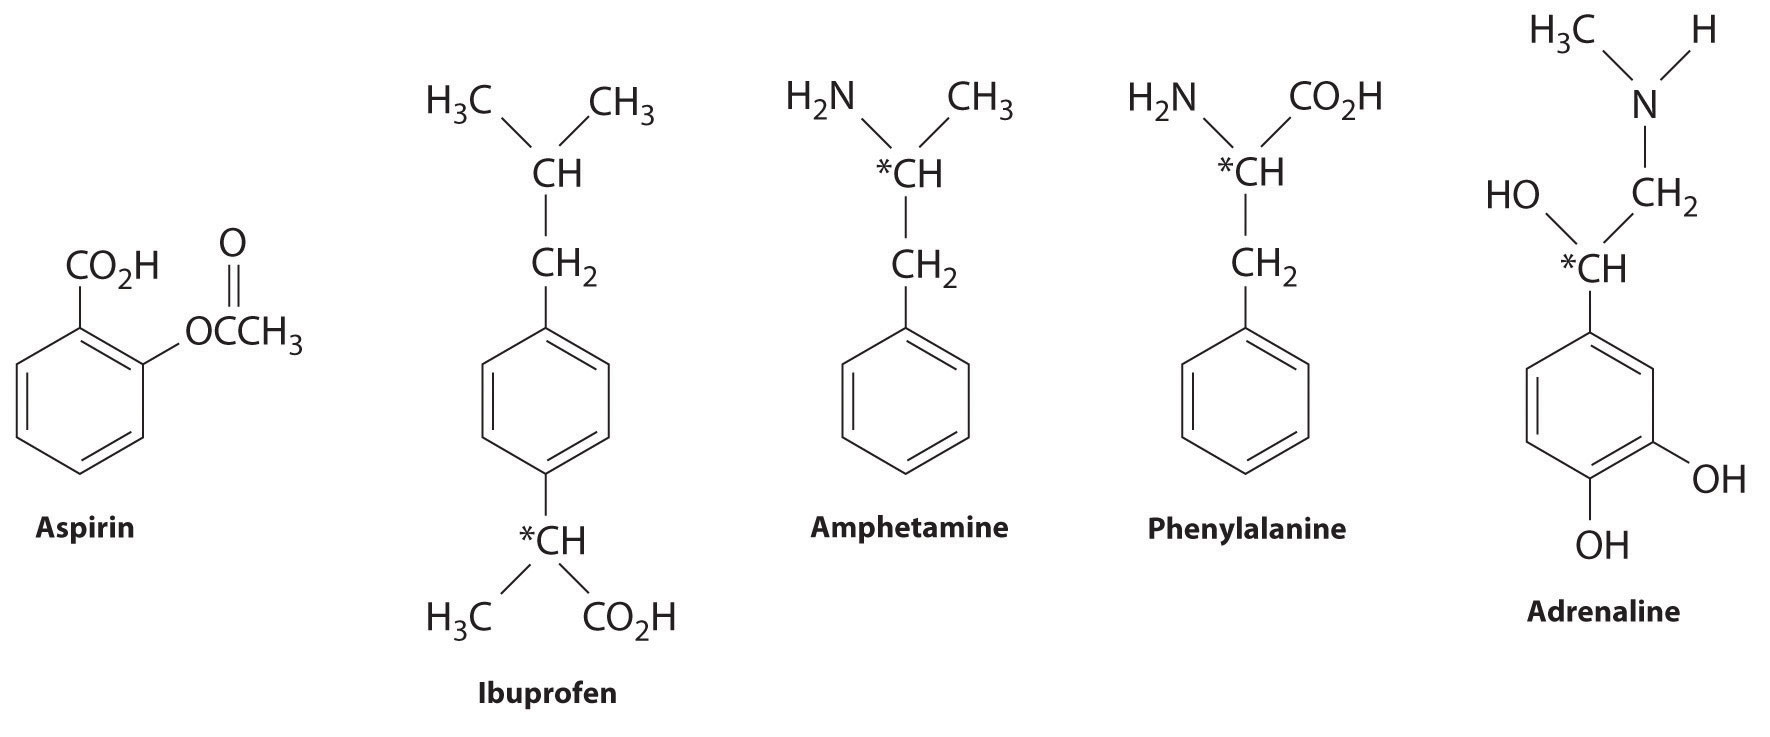 IUPAC NOMENCLATURE RULES-IUPAC NAME-ORGANIC CHEMISTRY